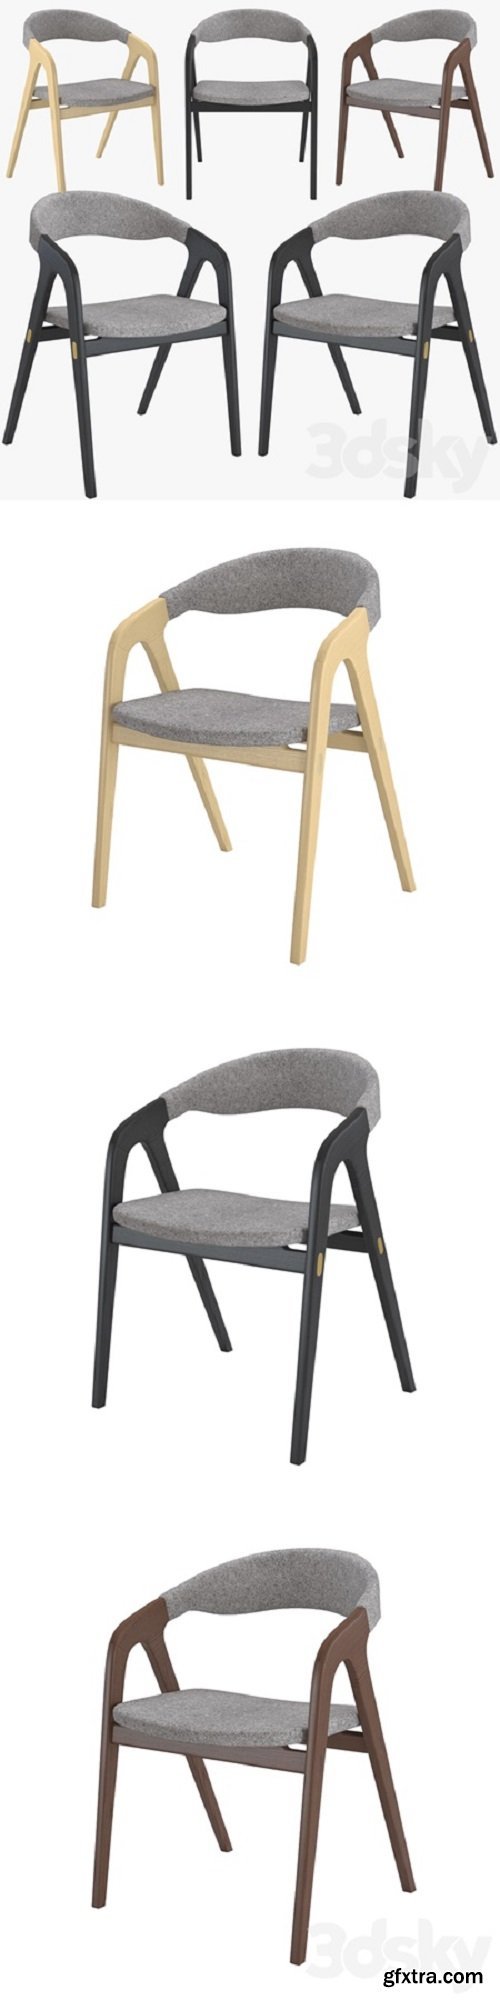 Chair Kaede Chair by Modloft